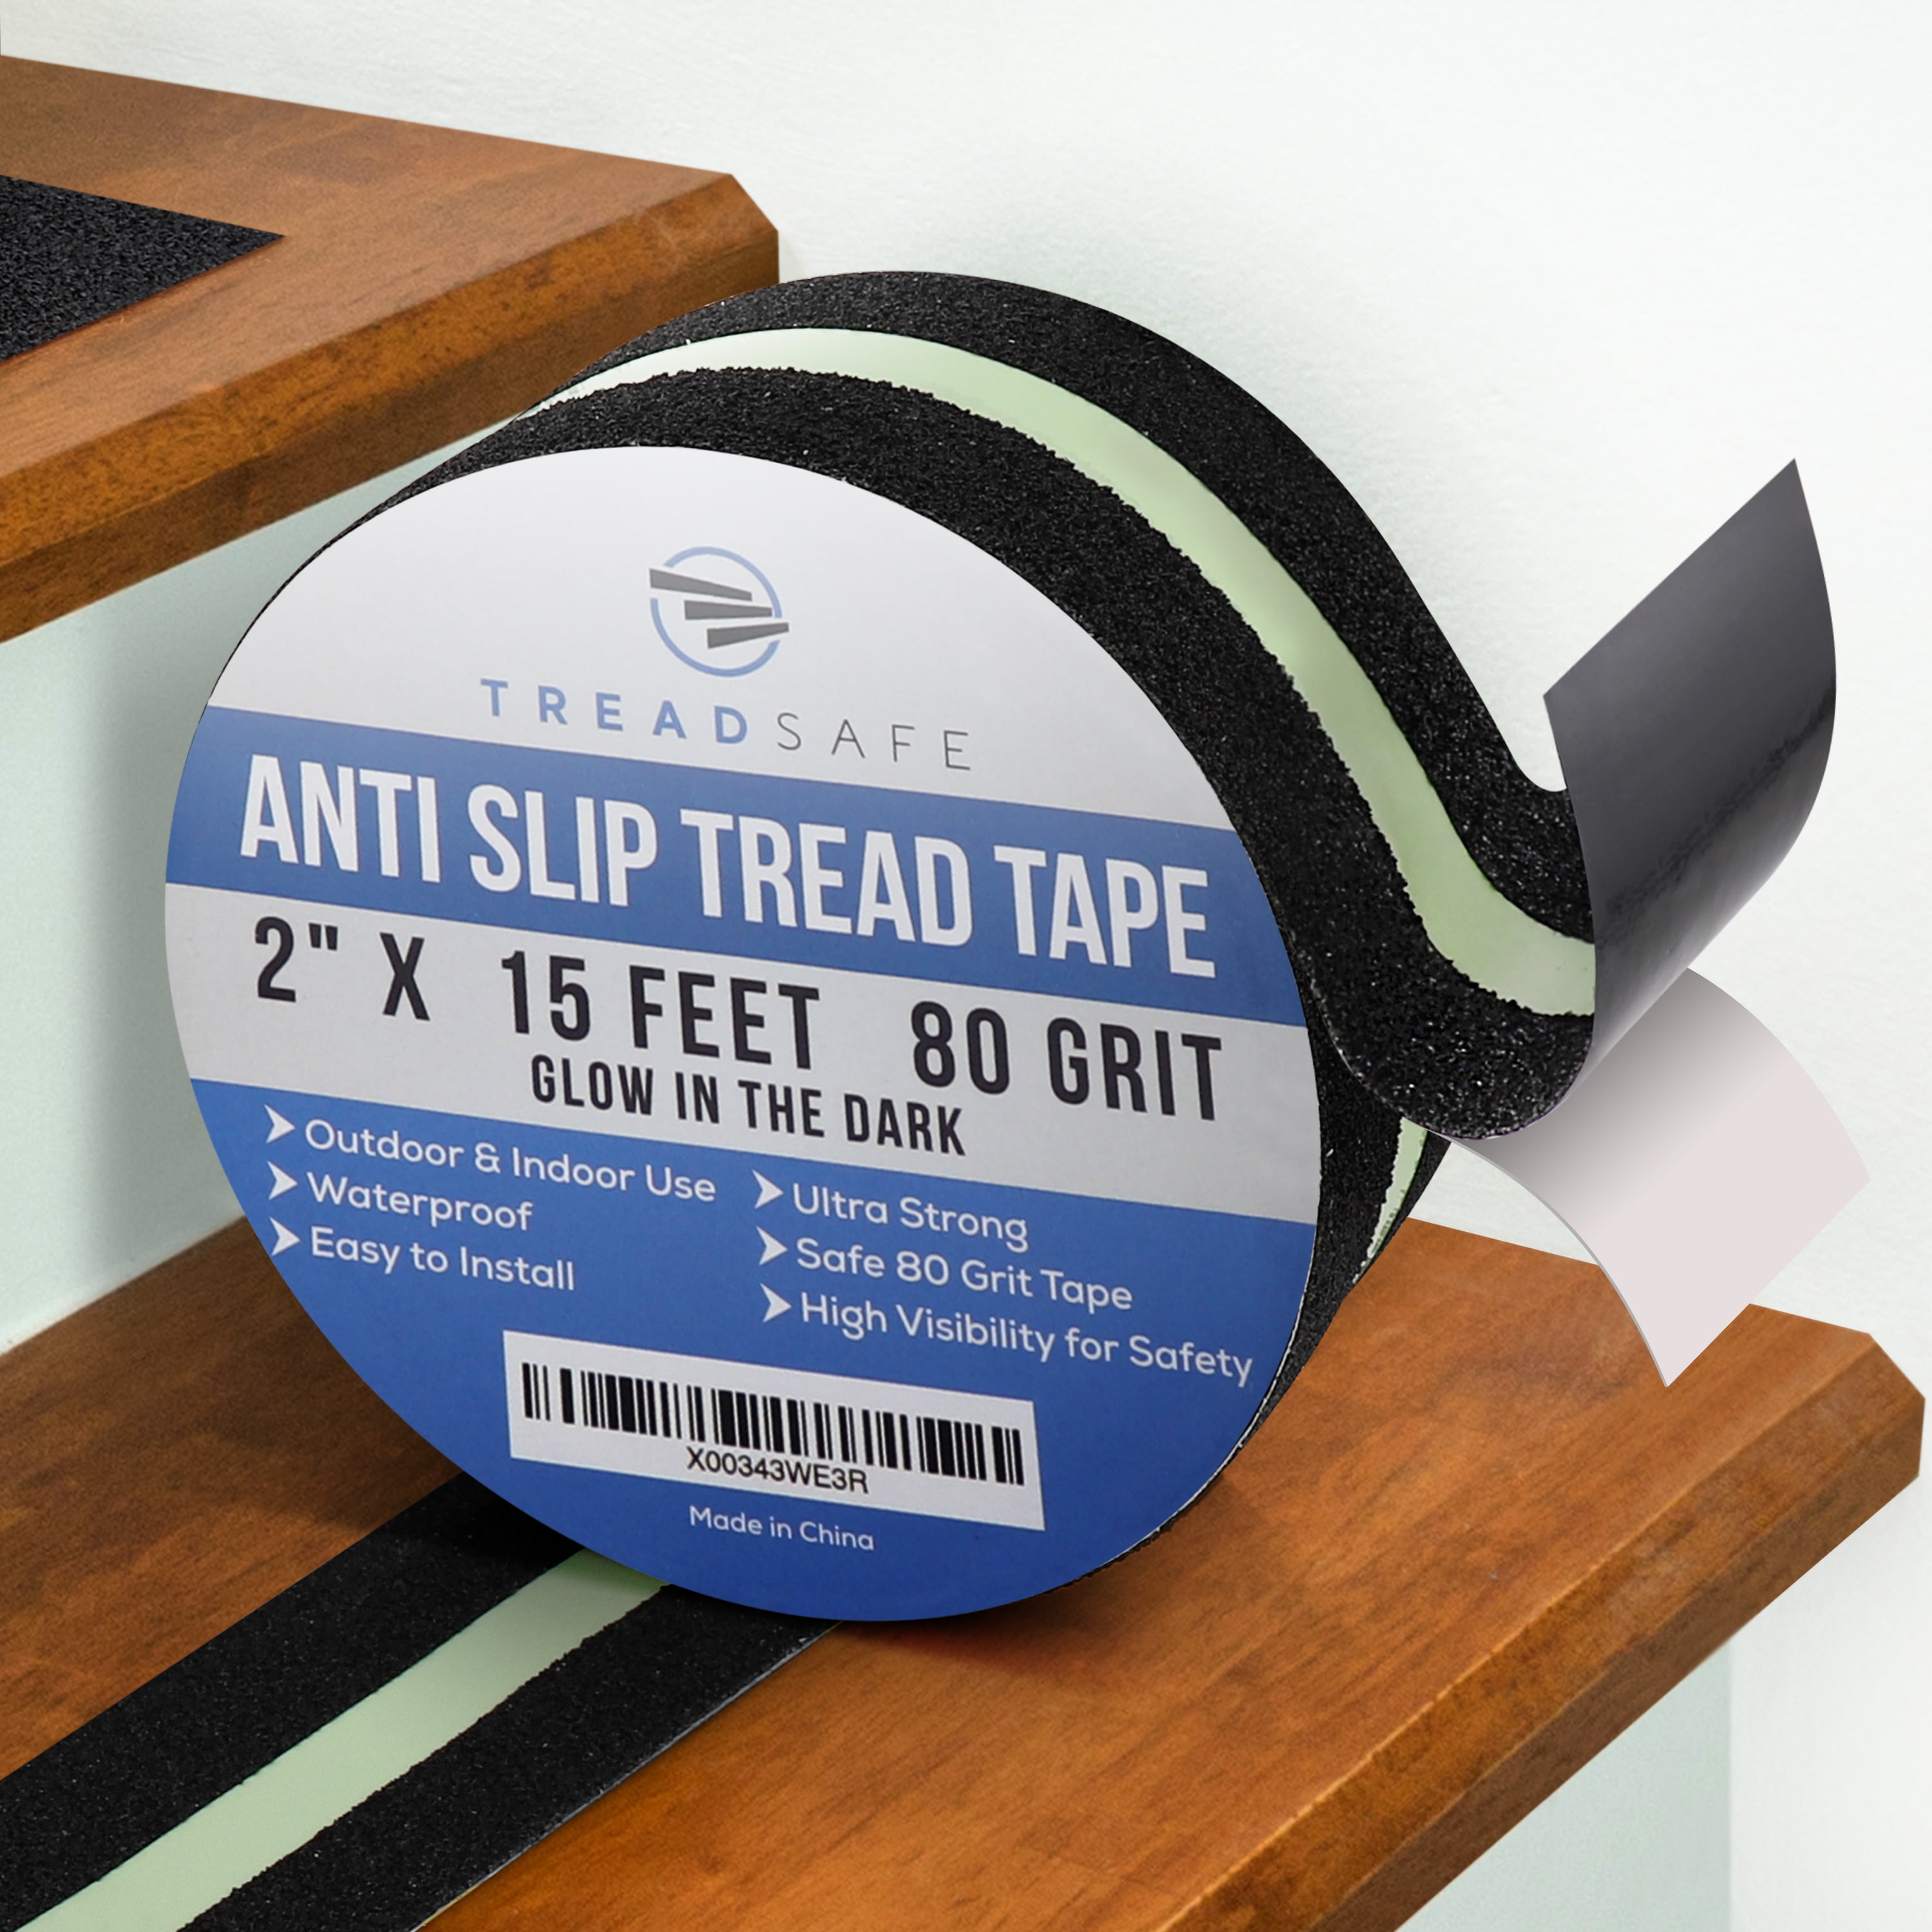 XFasten Waterproof Anti Slip Tape, 2 Inches x 30 Foot